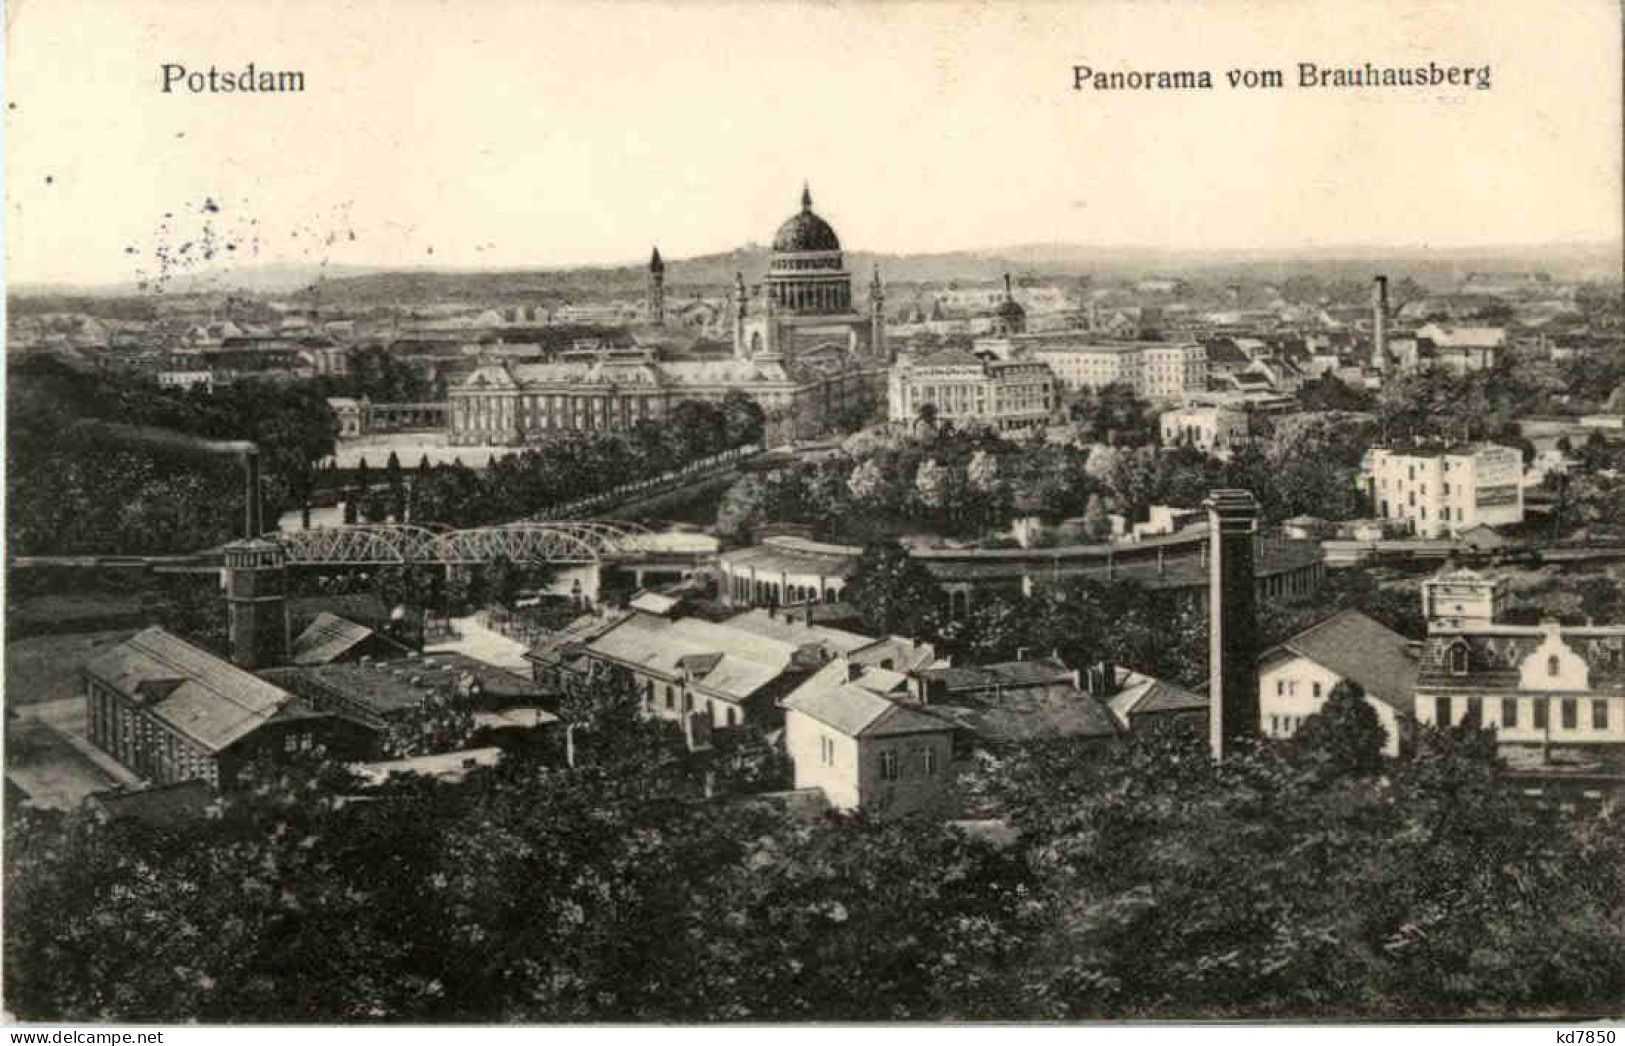 Potsdam - Potsdam